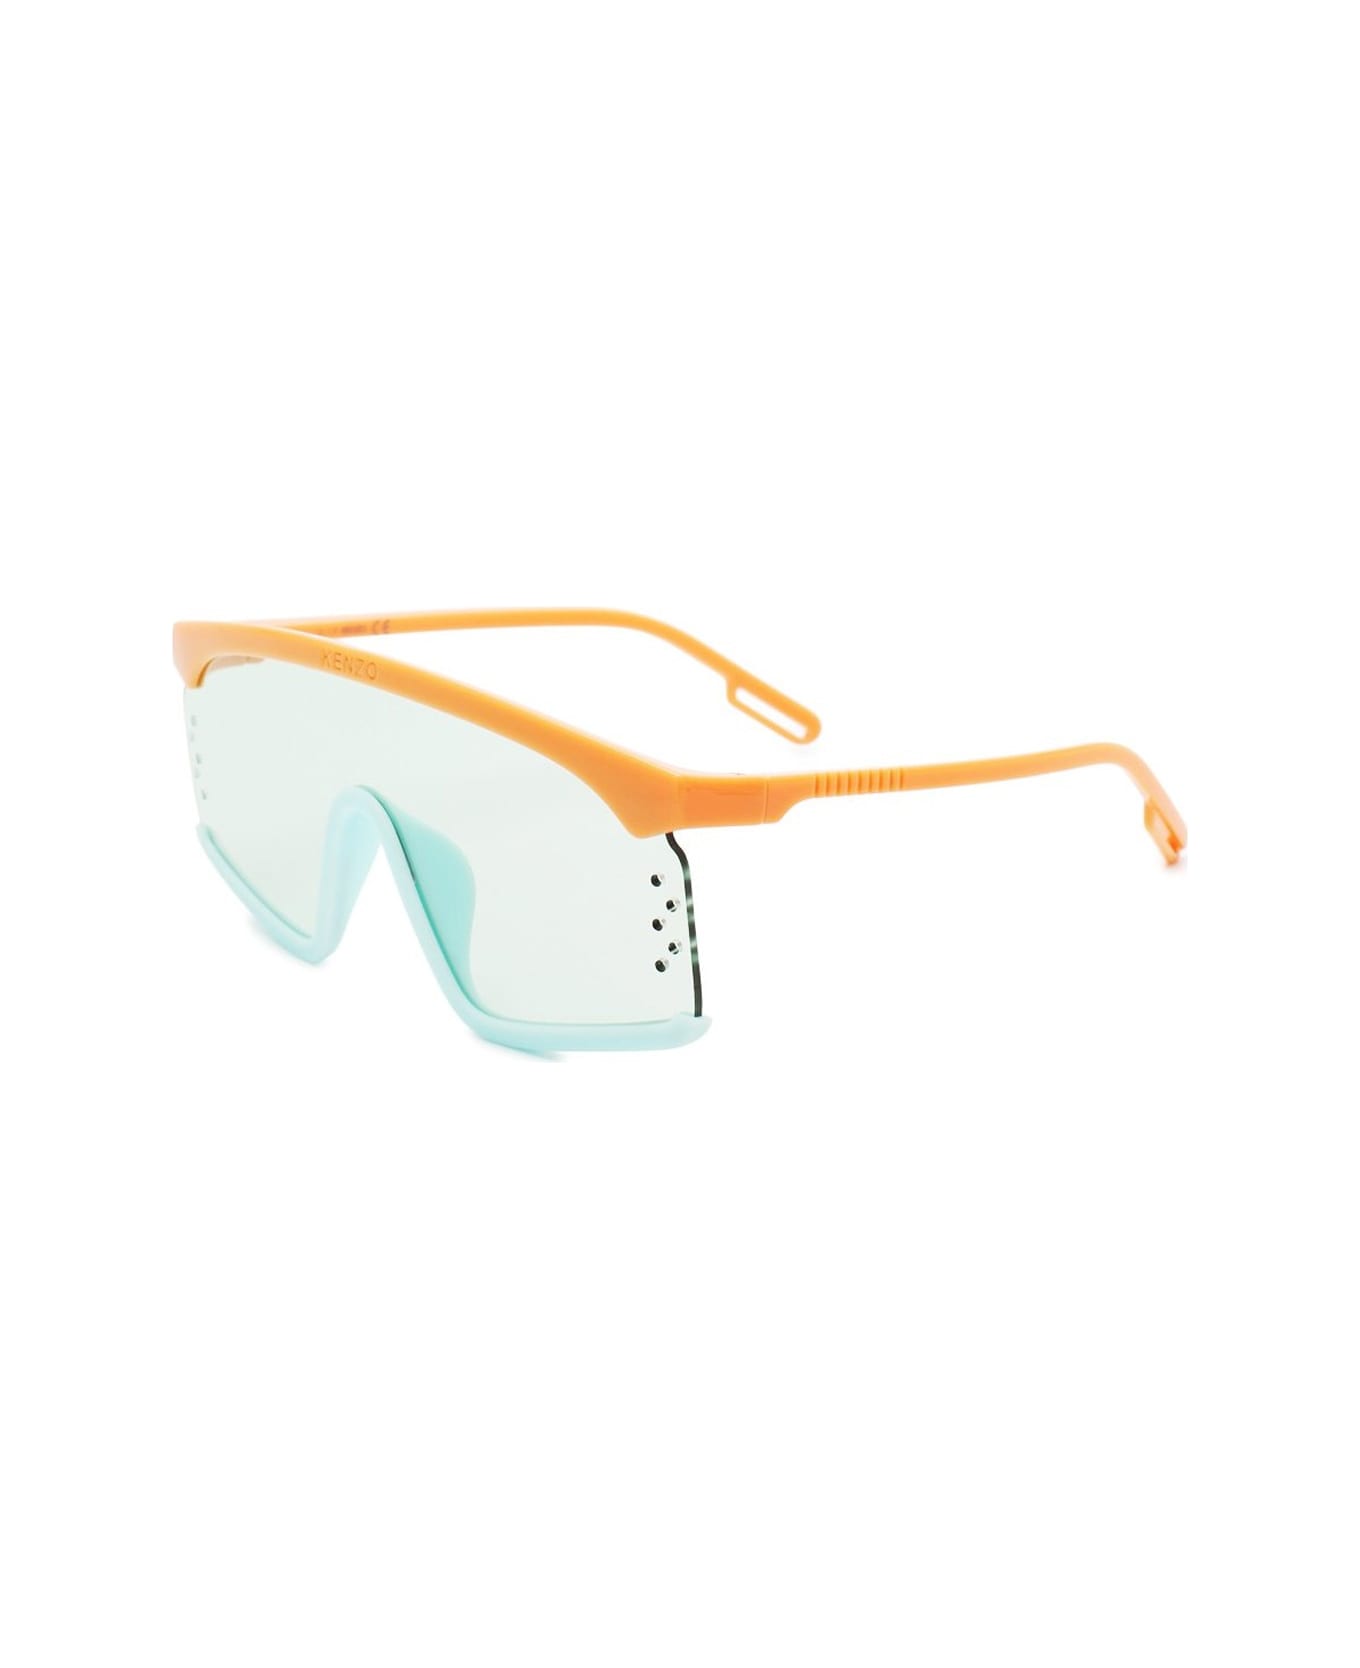 Kenzo Kz40010u Sunglasses - Arancione サングラス